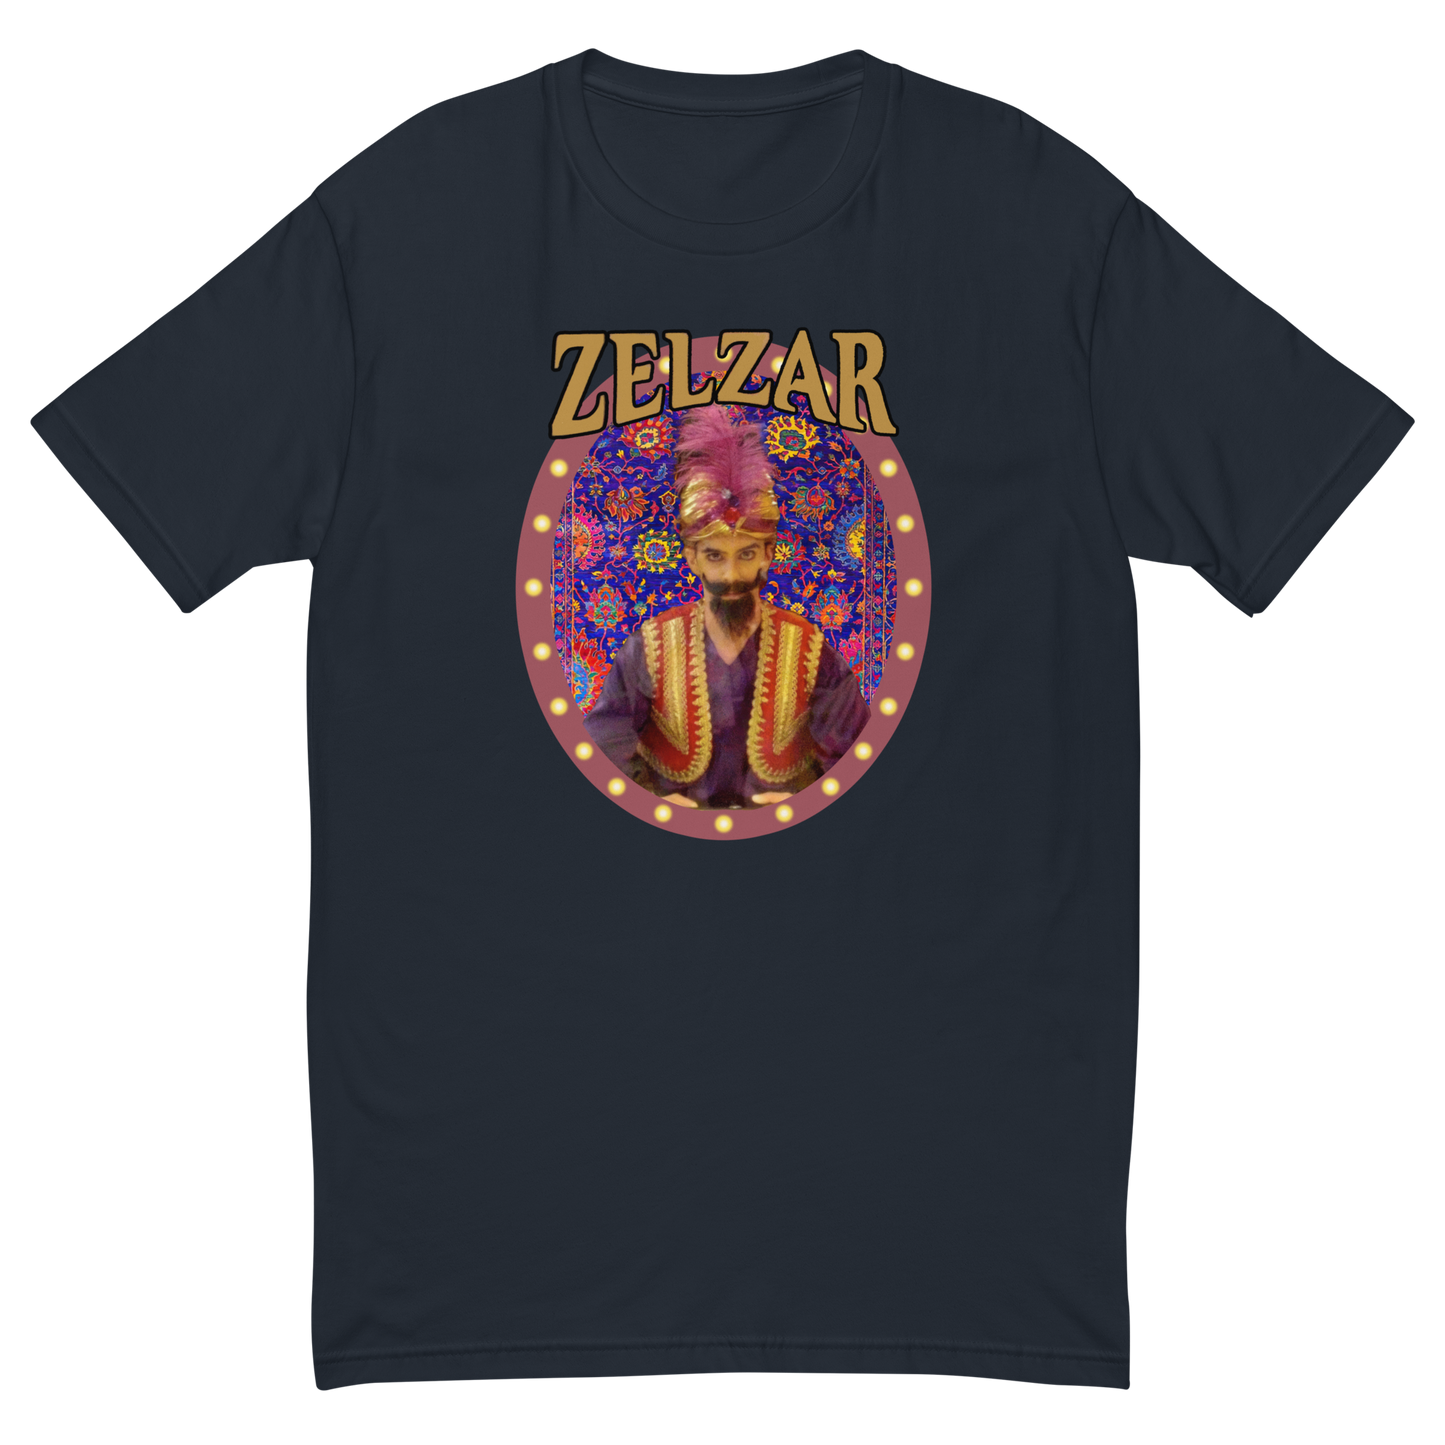 Wizards of Waverly Place - Zelzar T-Shirt